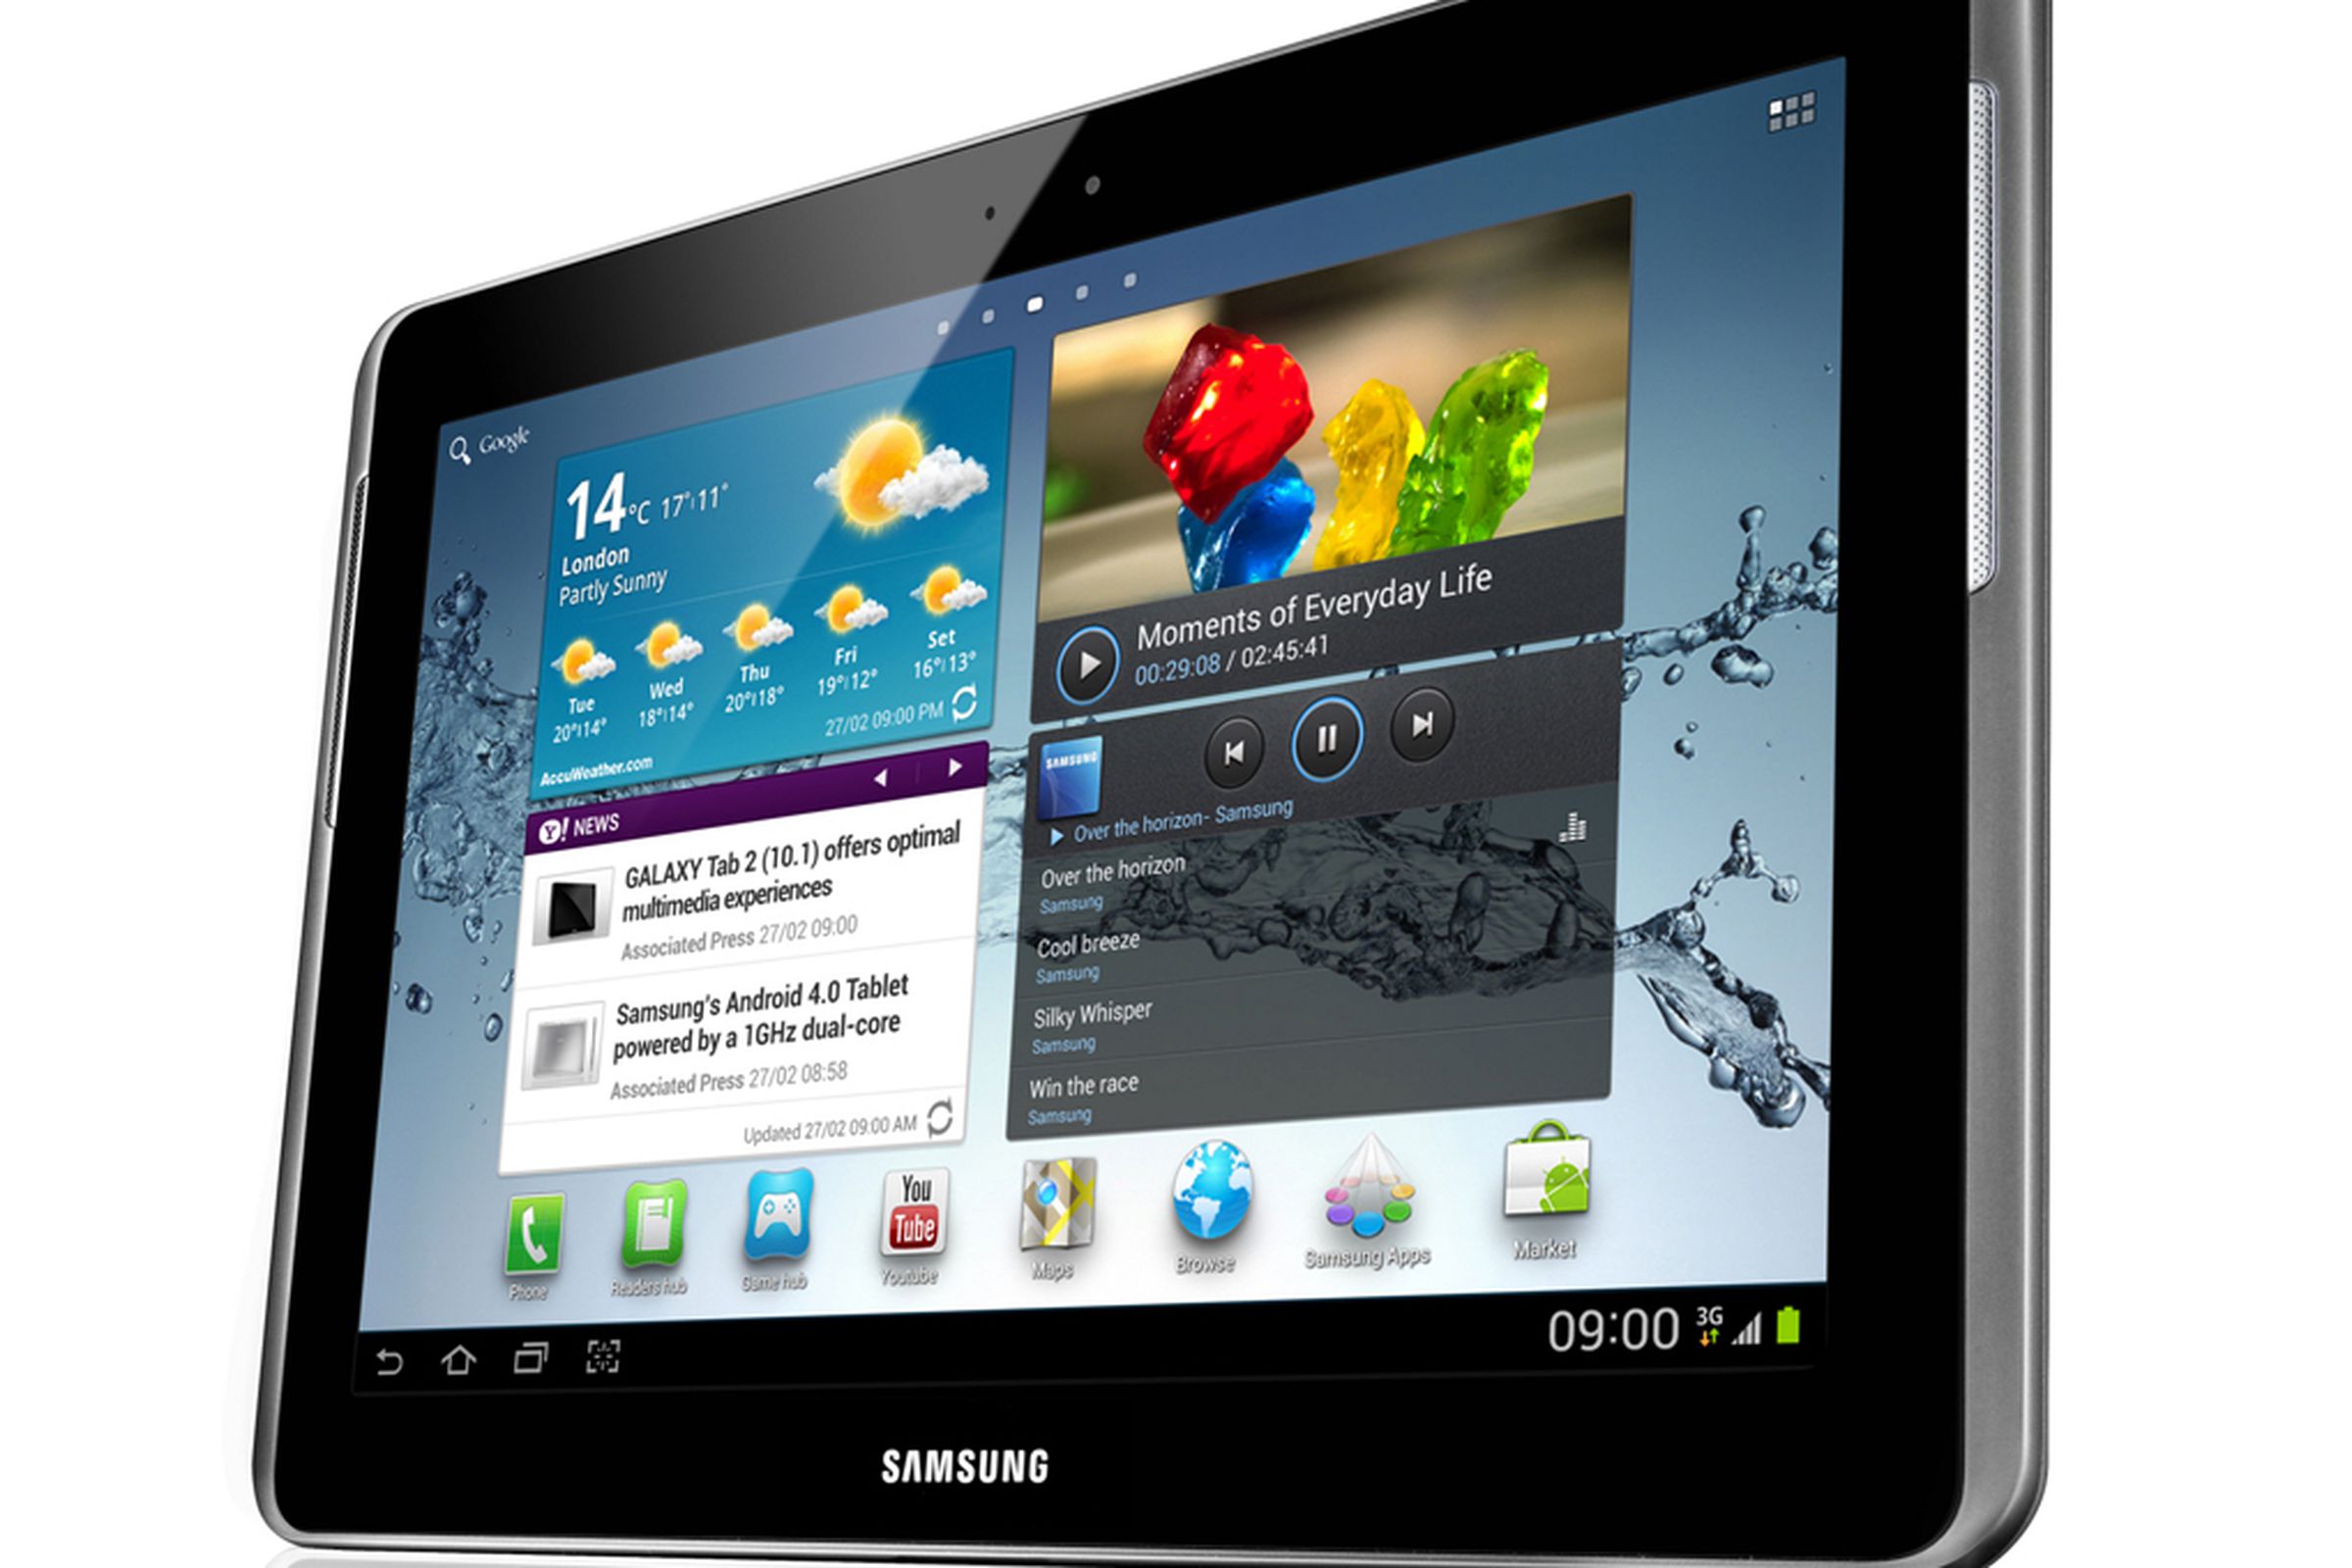 Gallery Photo: Samsung Galaxy Tab 2 (10.1) press images